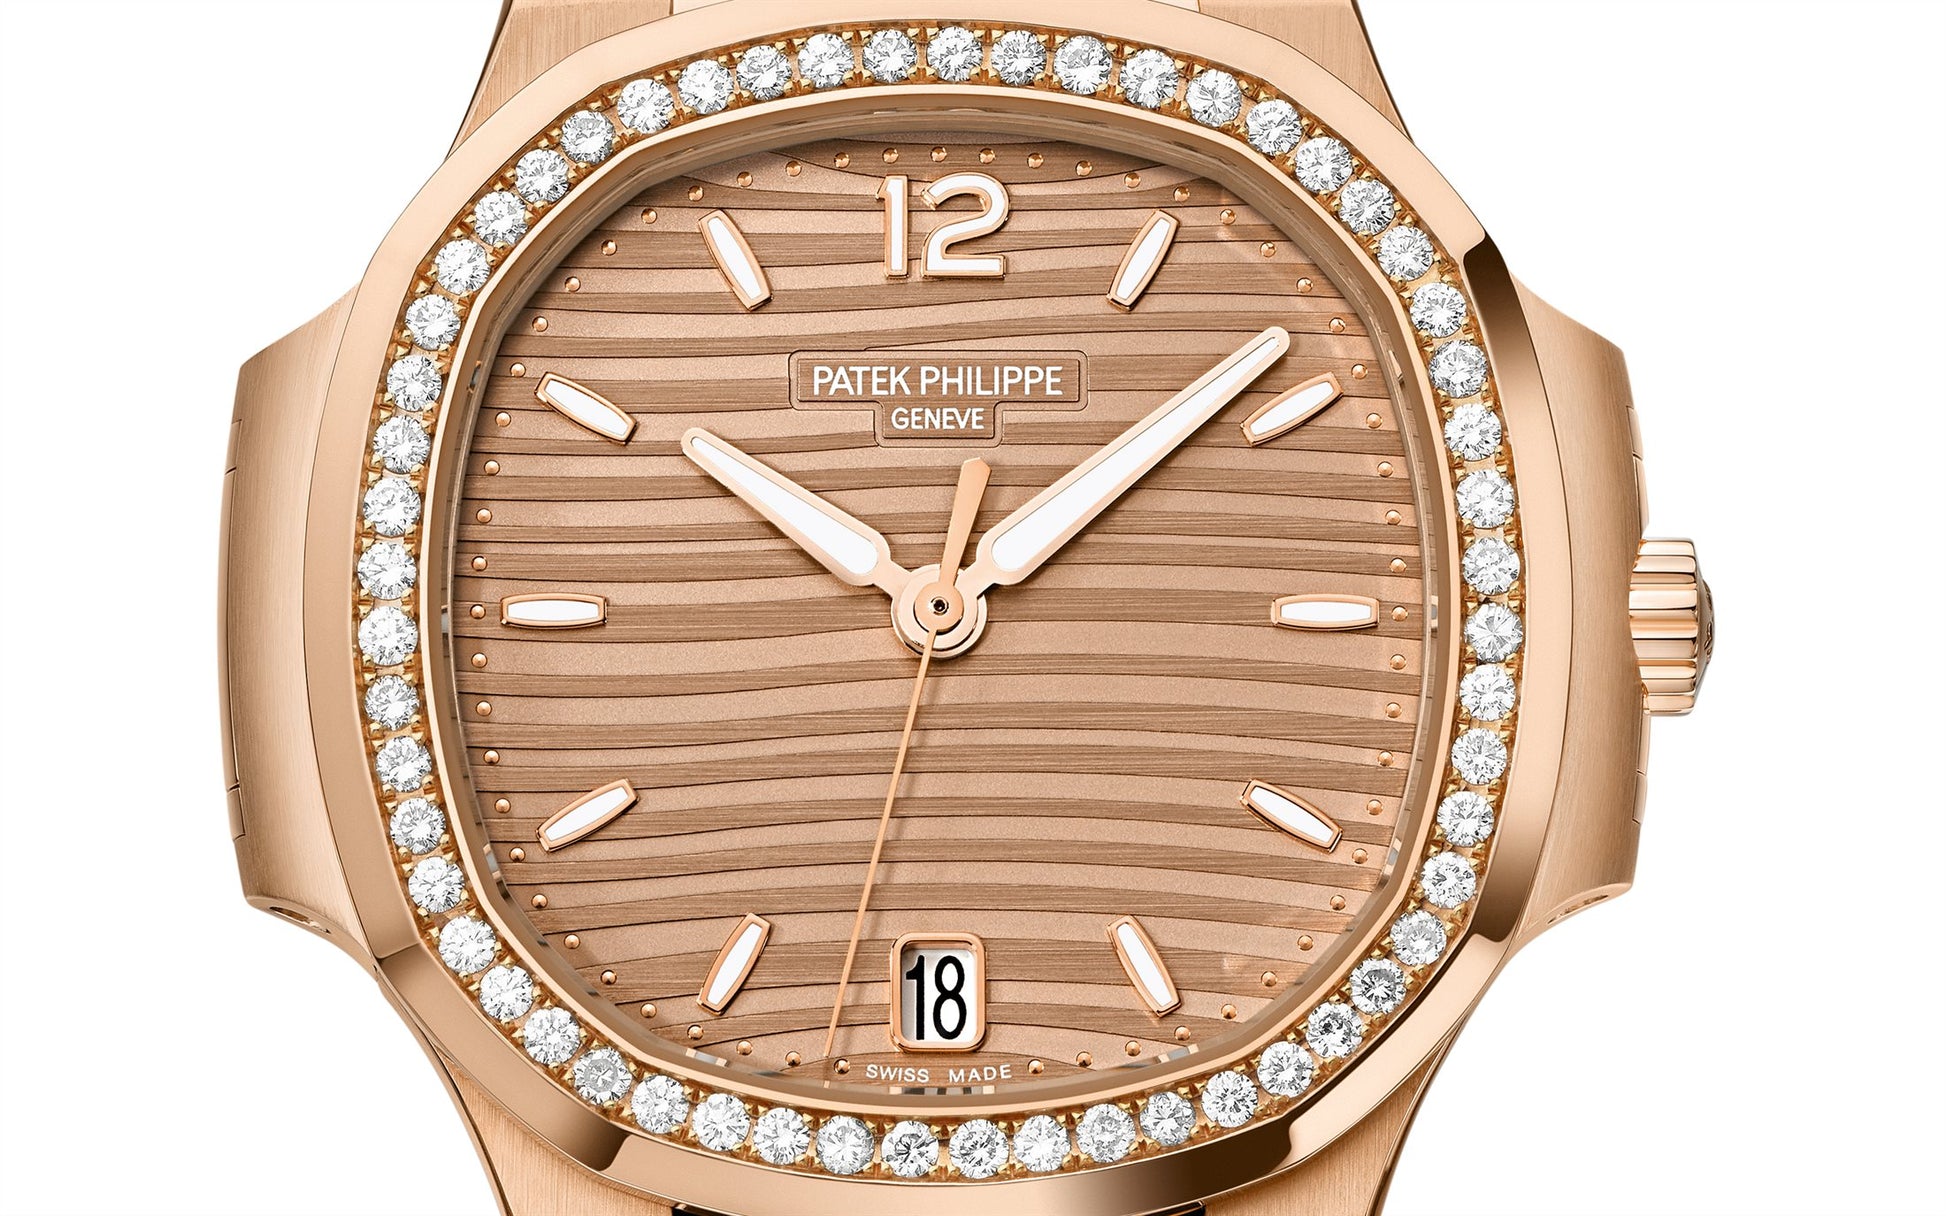 Patek Philippe Nautilus Ladies Automatic Watch, 18k Rose Gold and Diamonds, 35,2mm, Ref# 7118/1200R-010, Dial